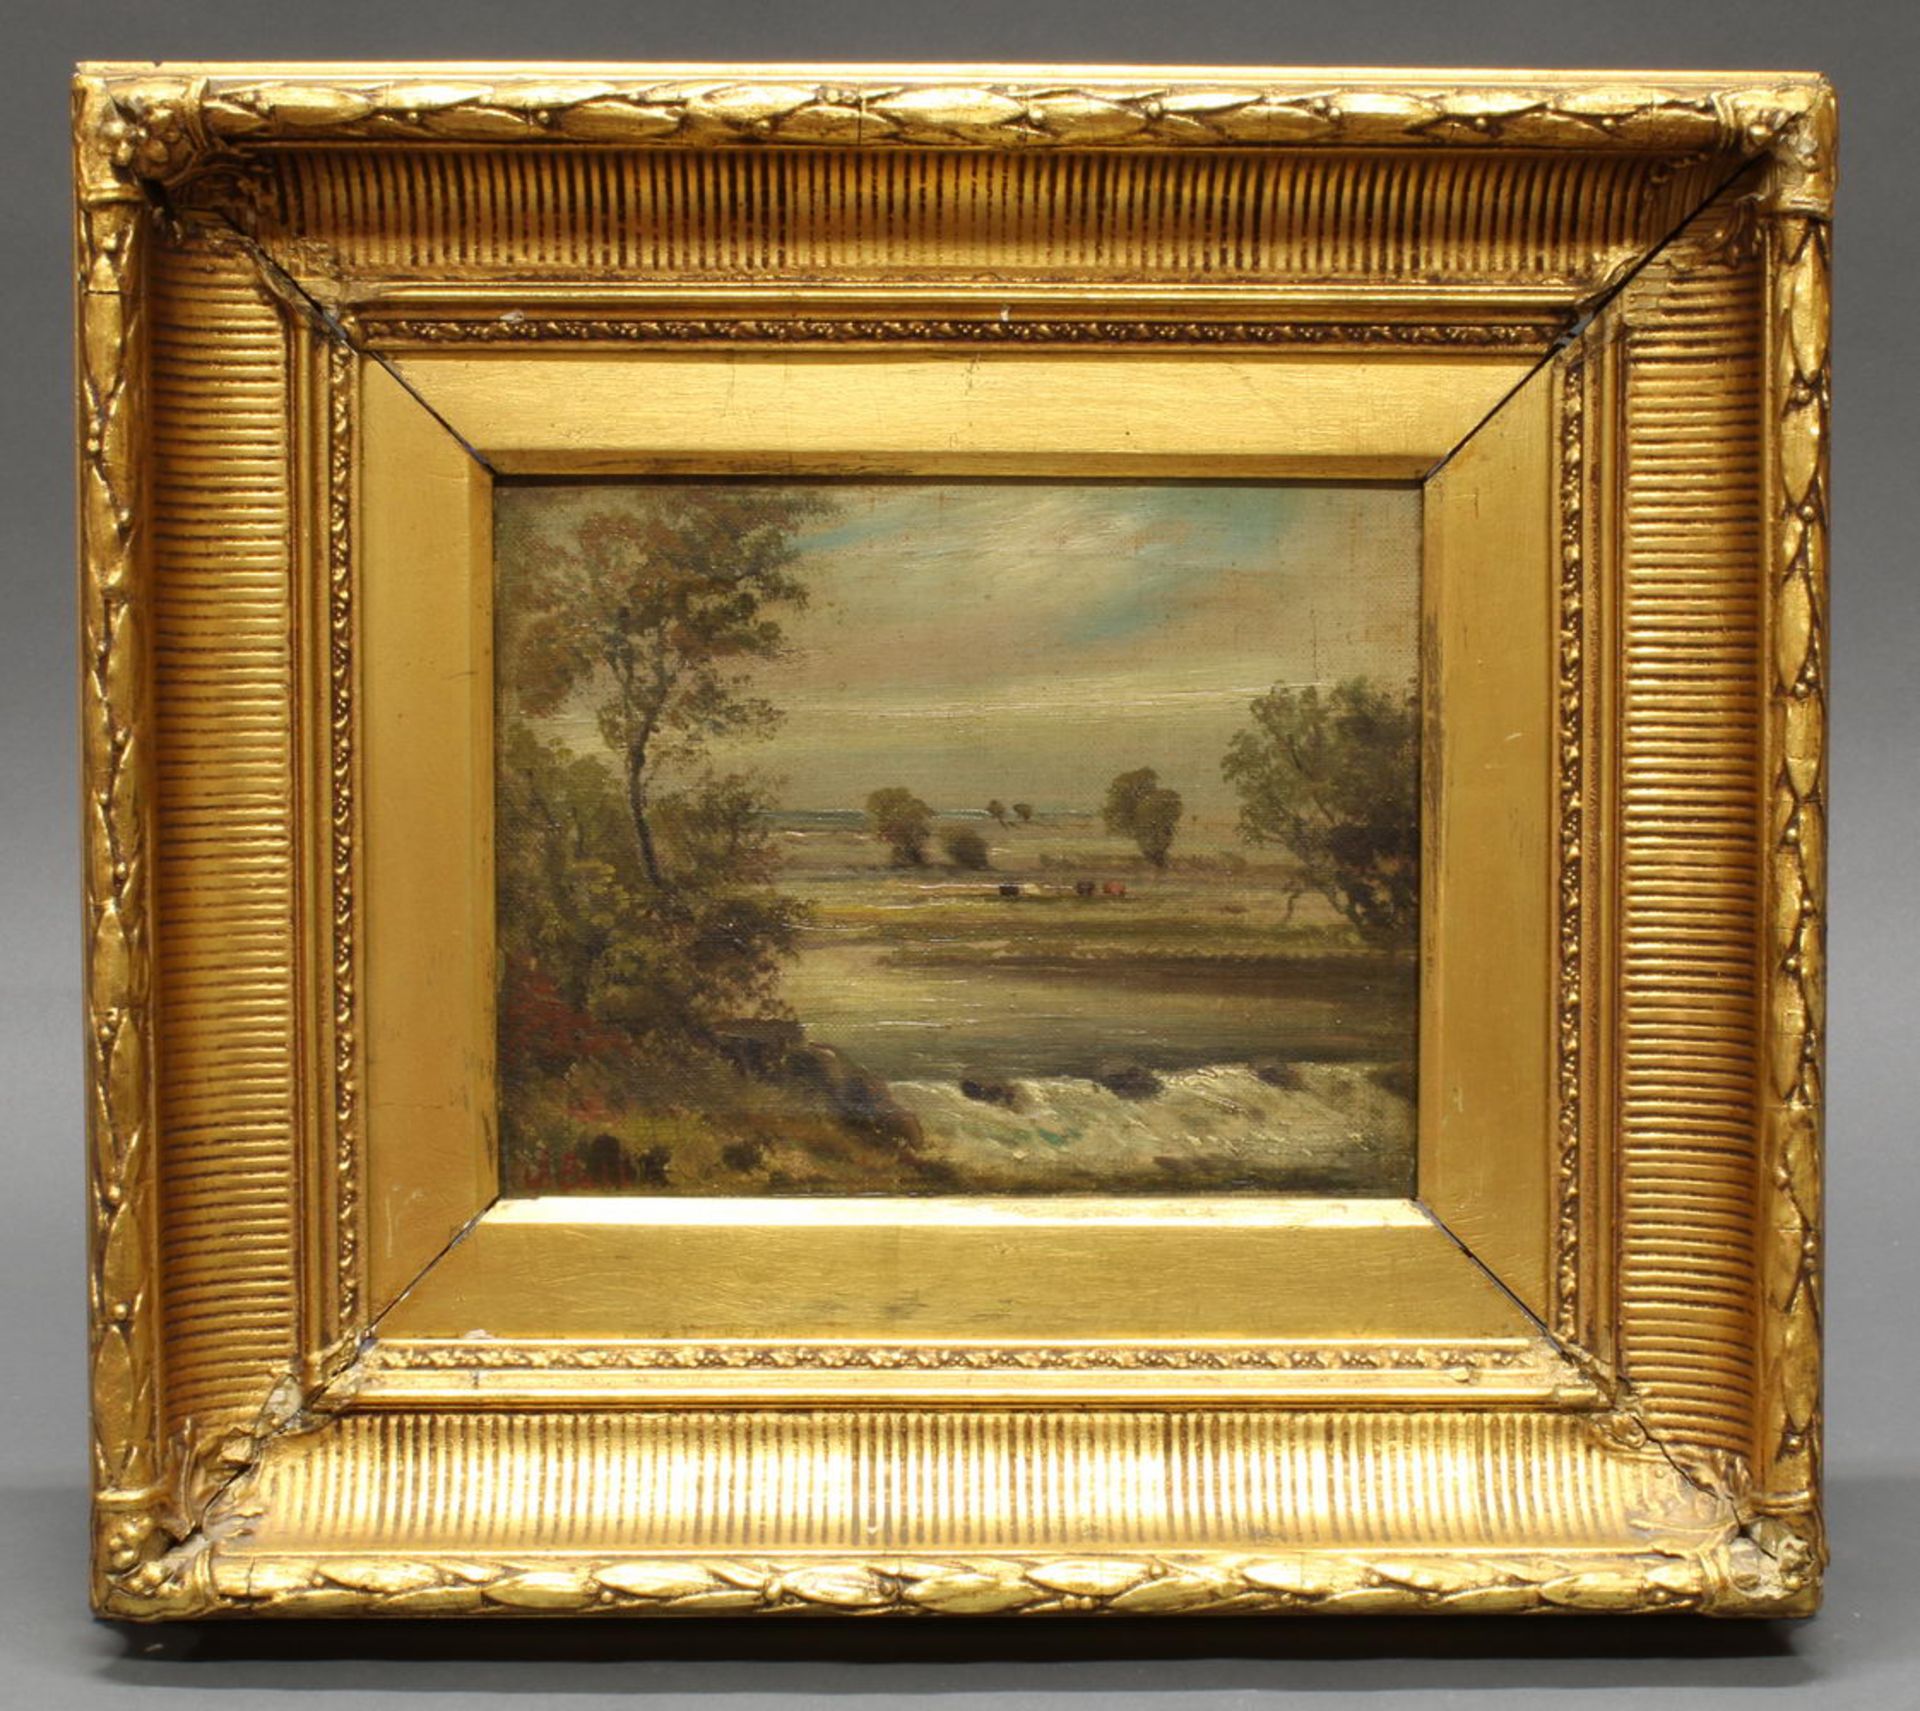 Ball, J. (19./20. Jh.), "Sommerliche Flusslandschaft", Öl auf Leinwand, signiert unten links J. Ba - Image 2 of 4